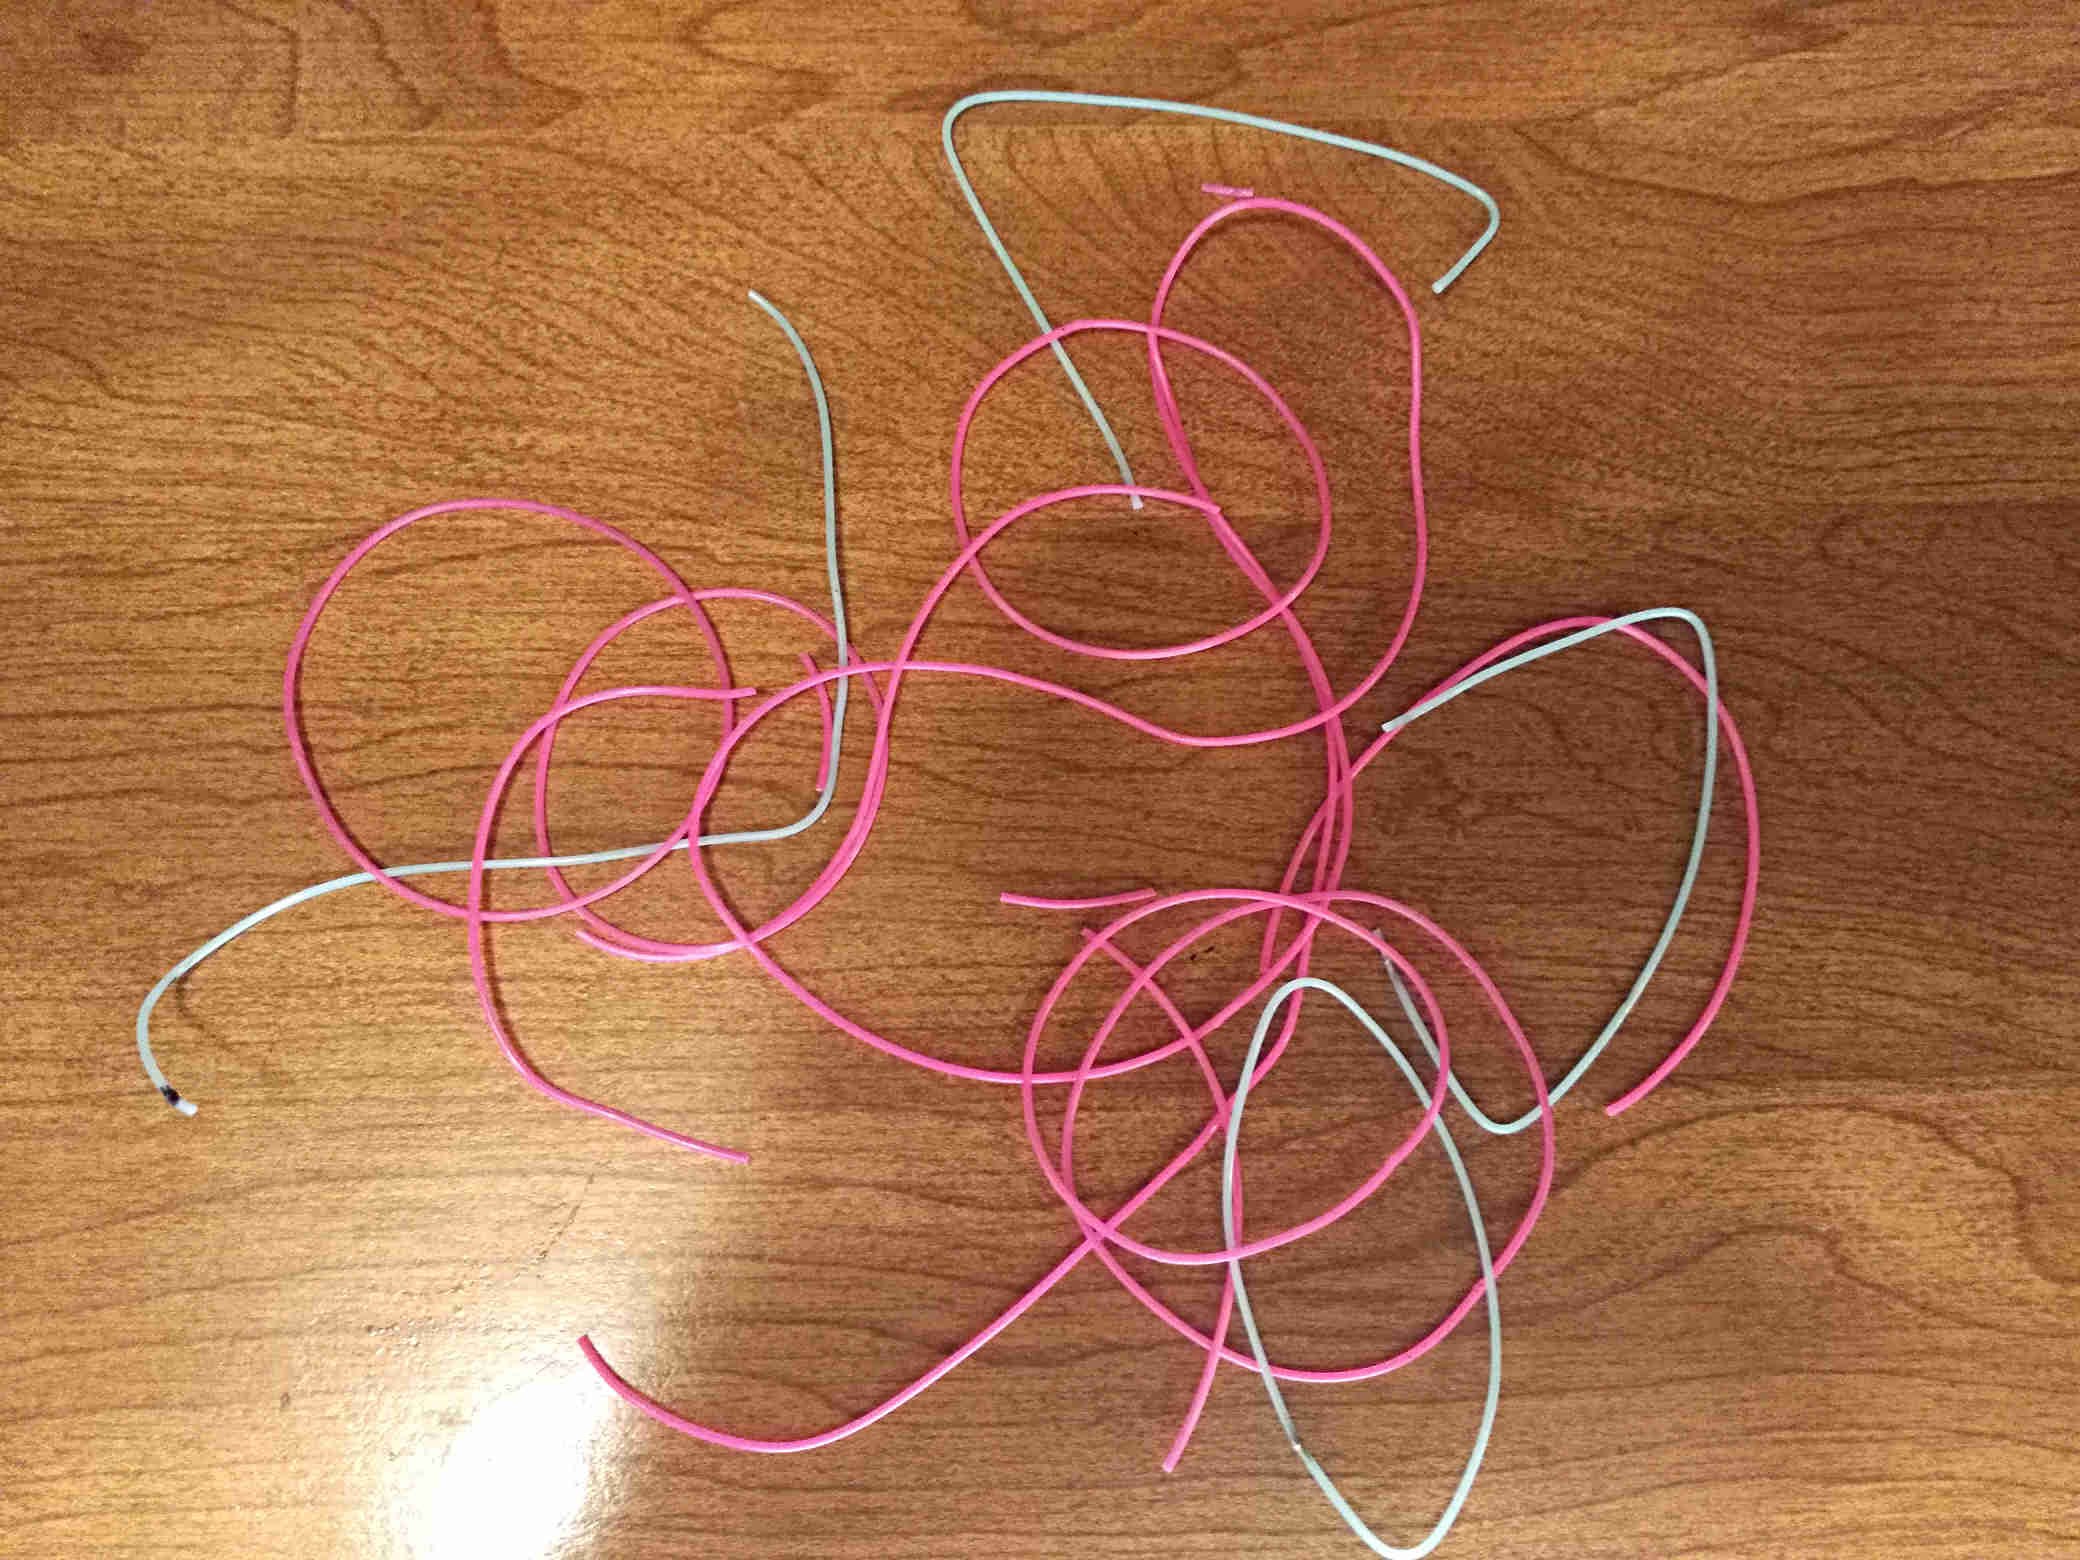 Pile of unsuccessful elastic cord belts